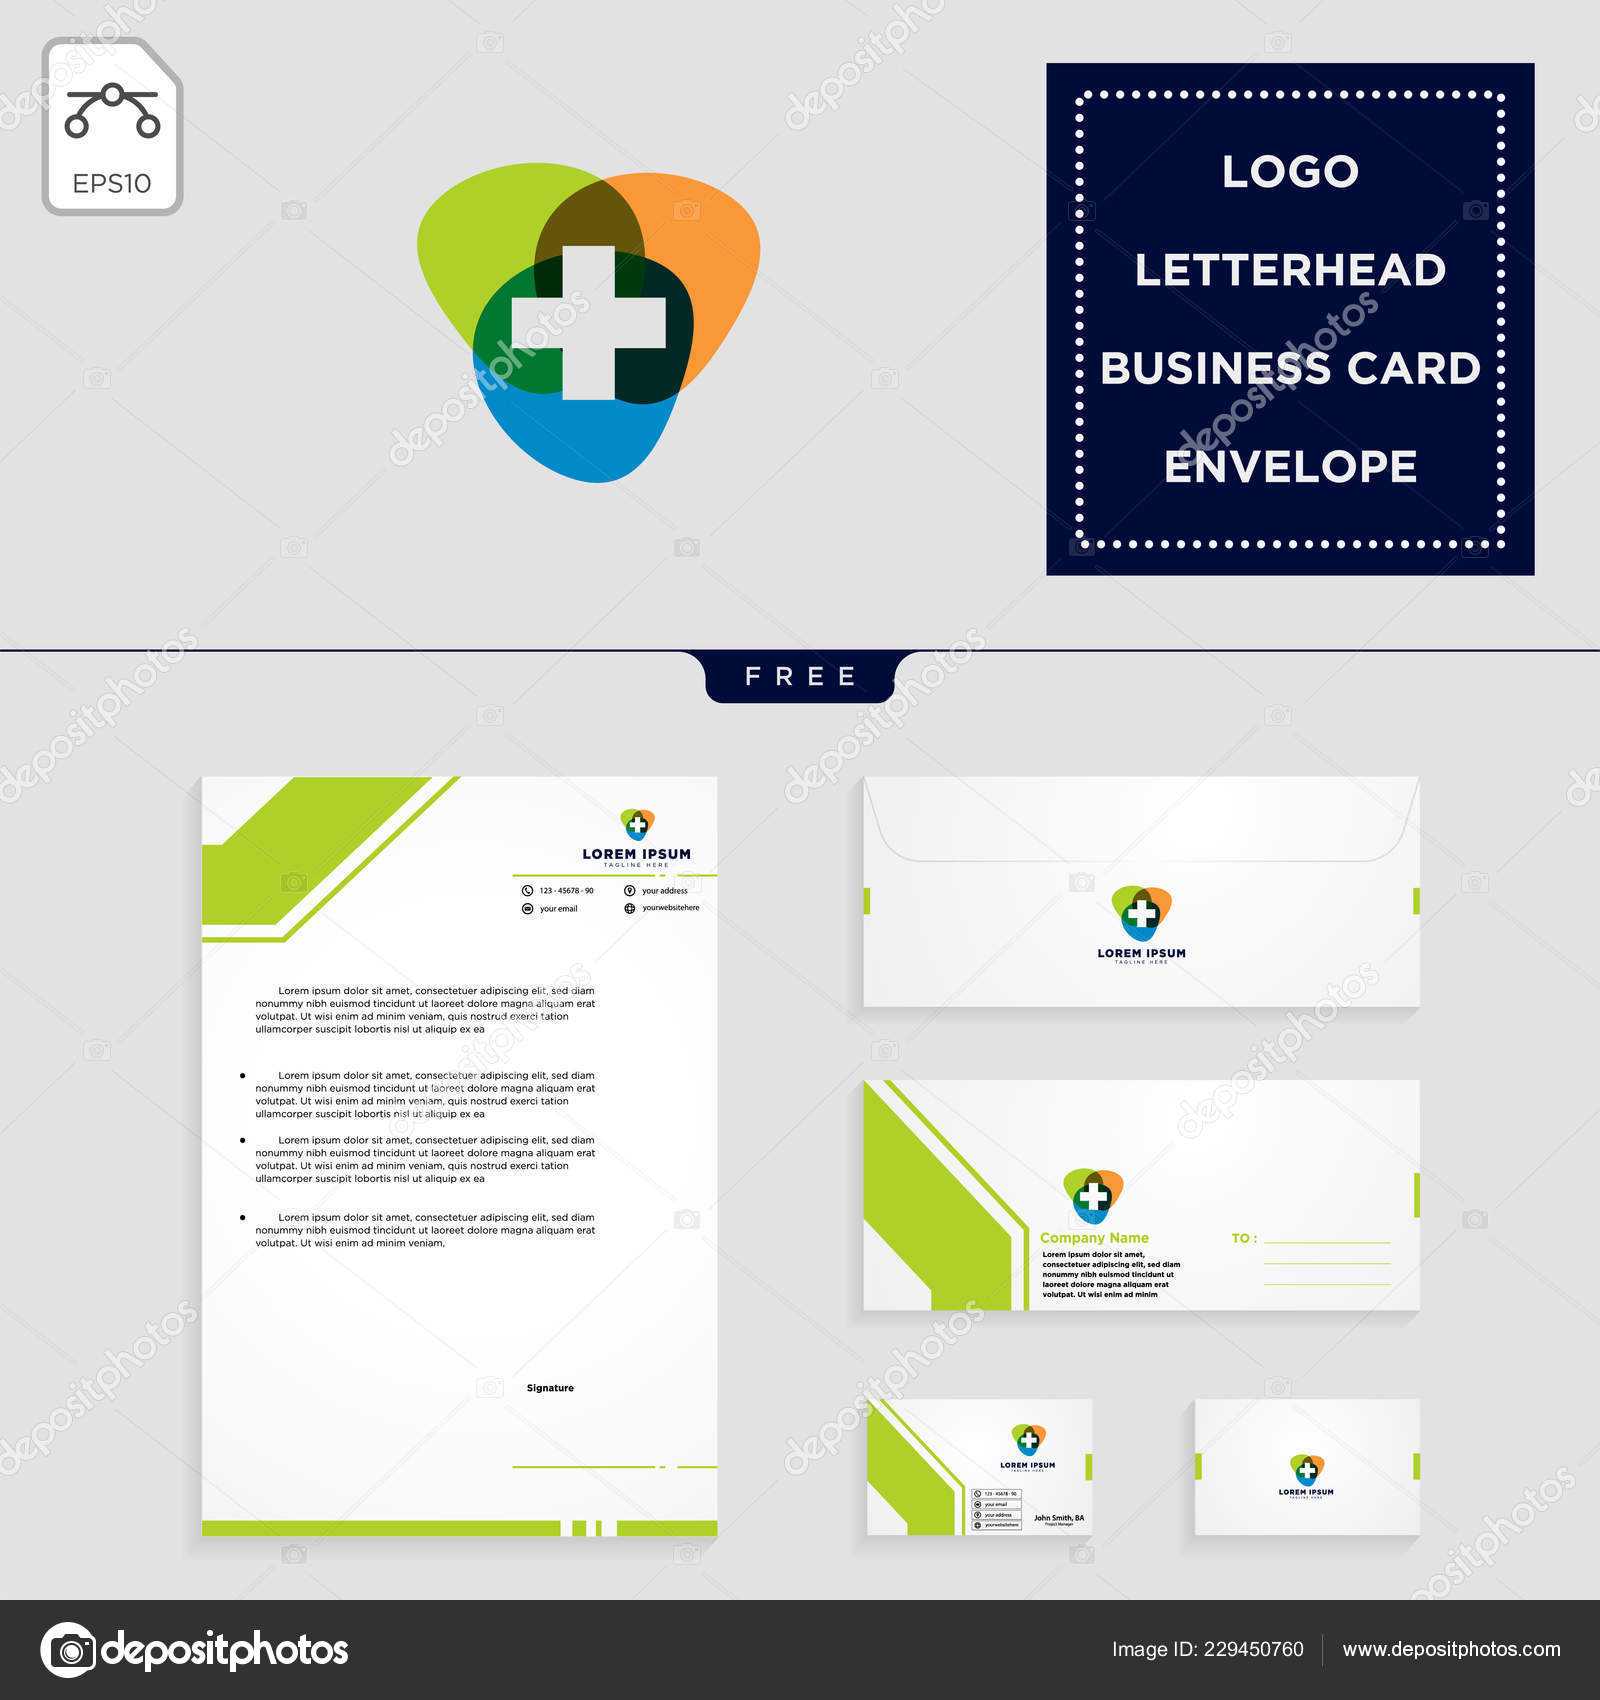 Medical Cross Logo Template Vector Illustration Free Regarding Business Card Letterhead Envelope Template